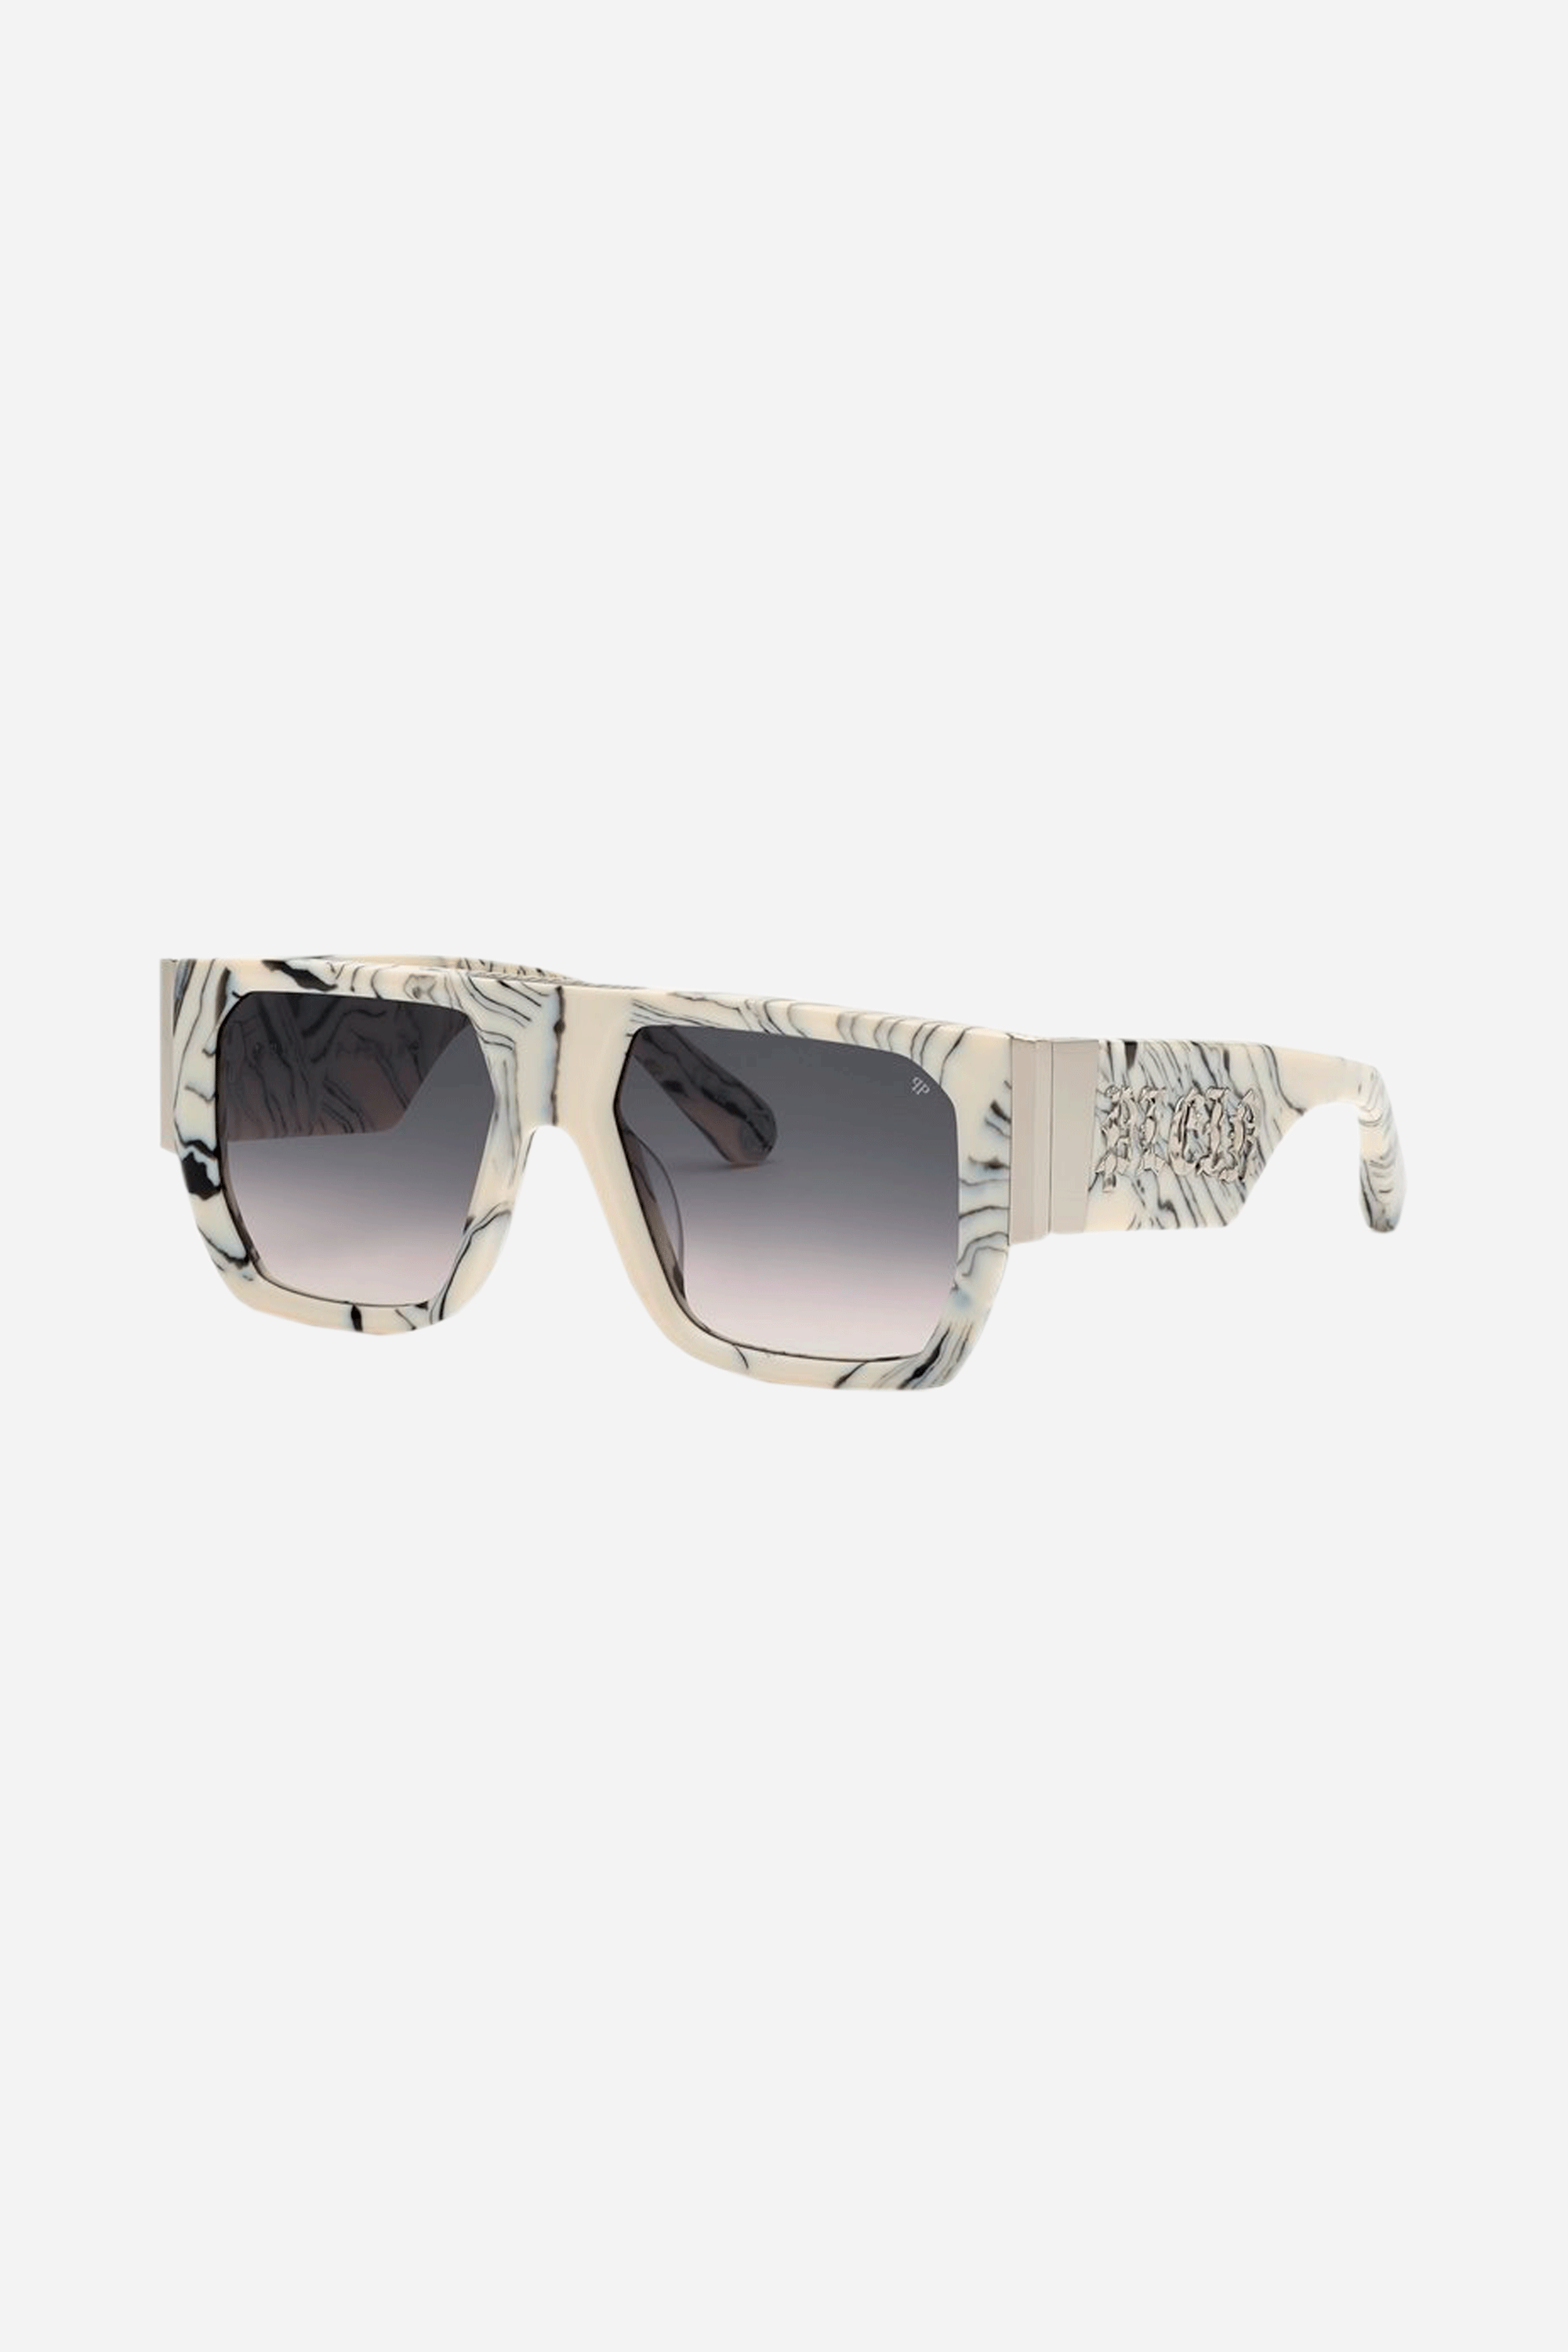 Philipp Plein flat top white sunglasses - Eyewear Club